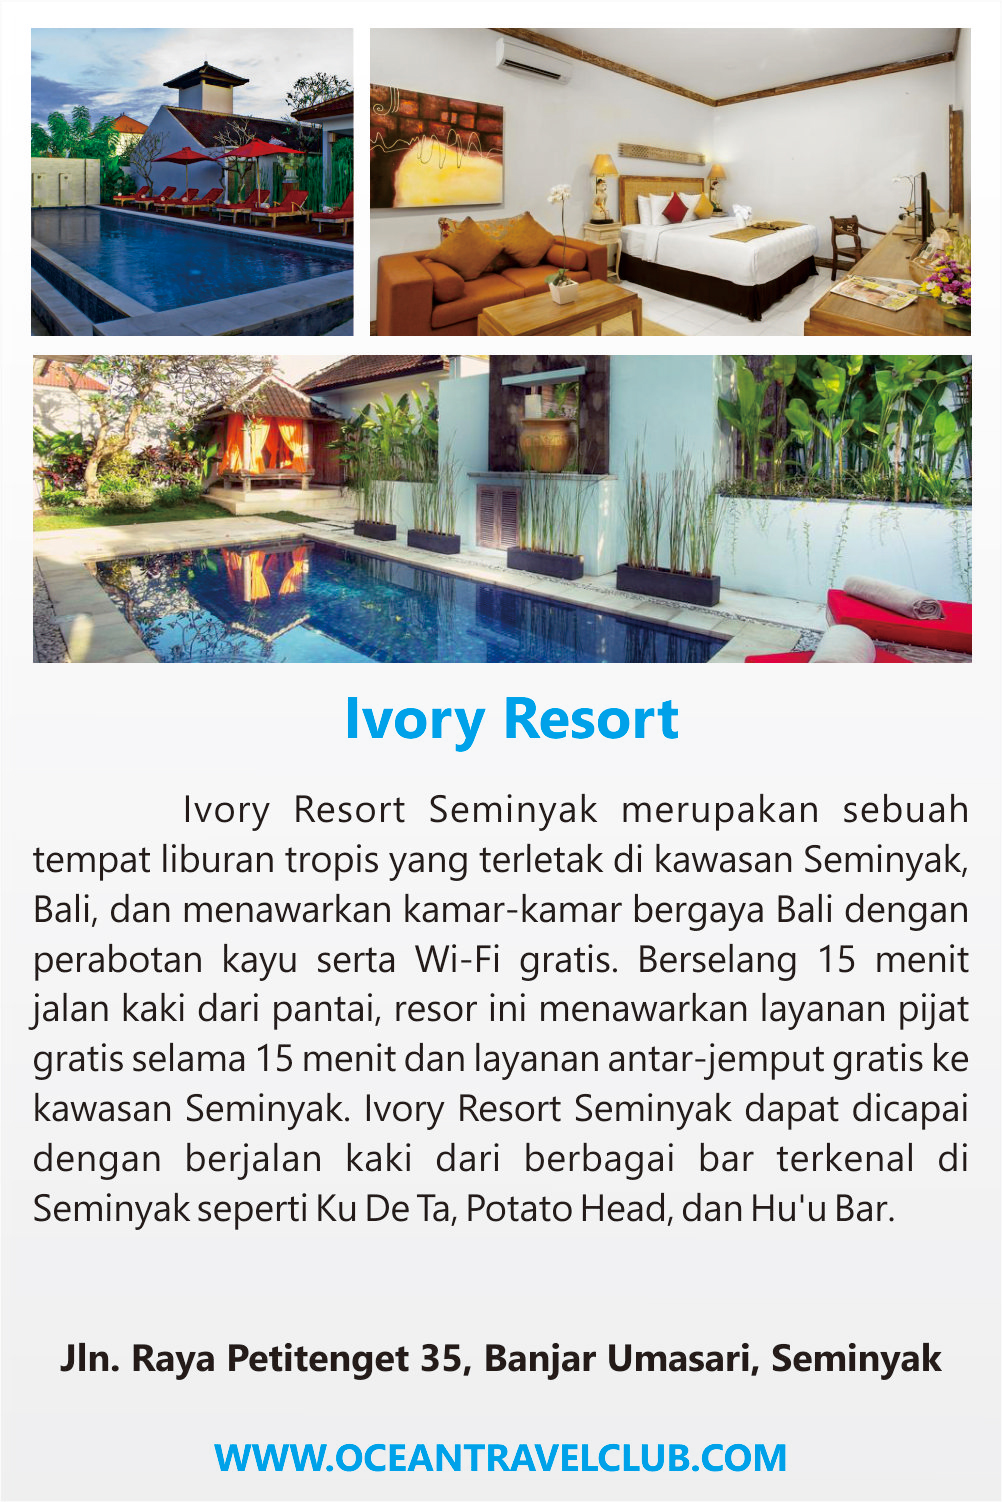 Ivory Resort